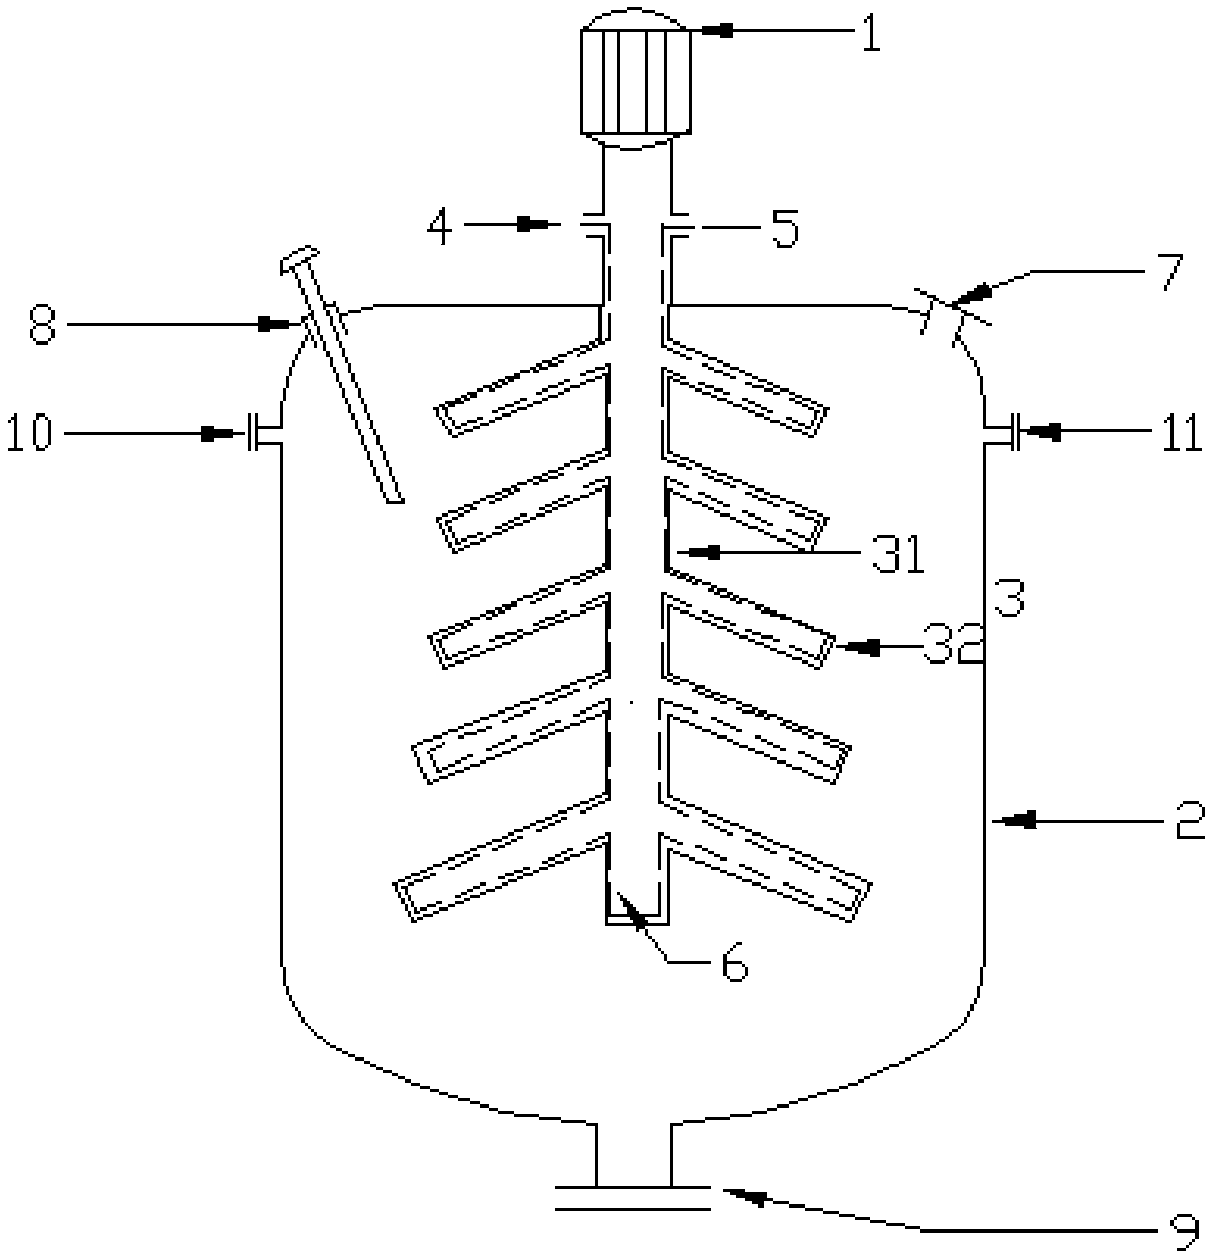 Biological fermentation apparatus